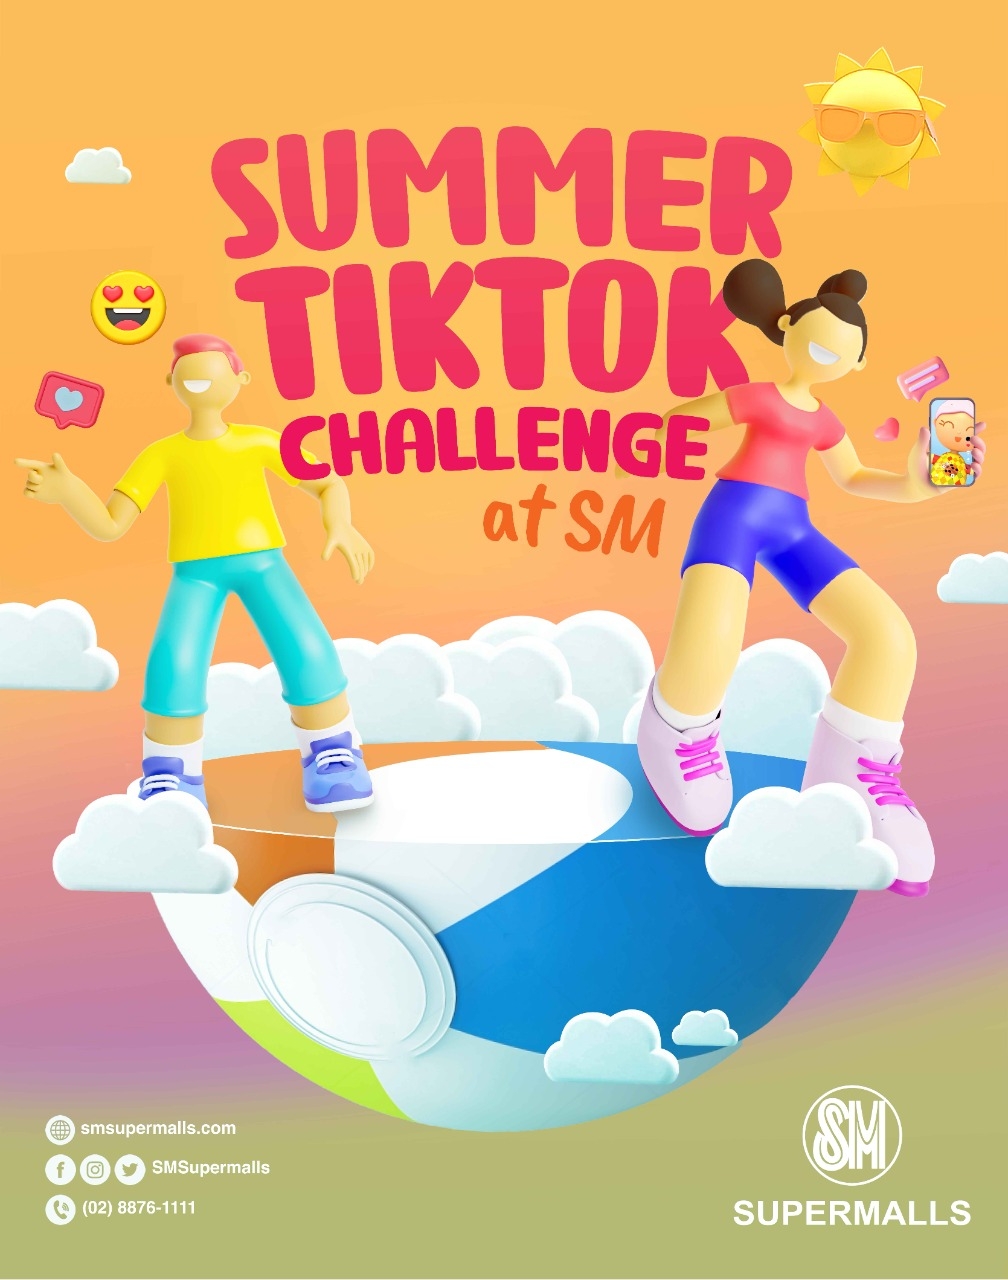 Join the Summer TikTok Challenge at SM!